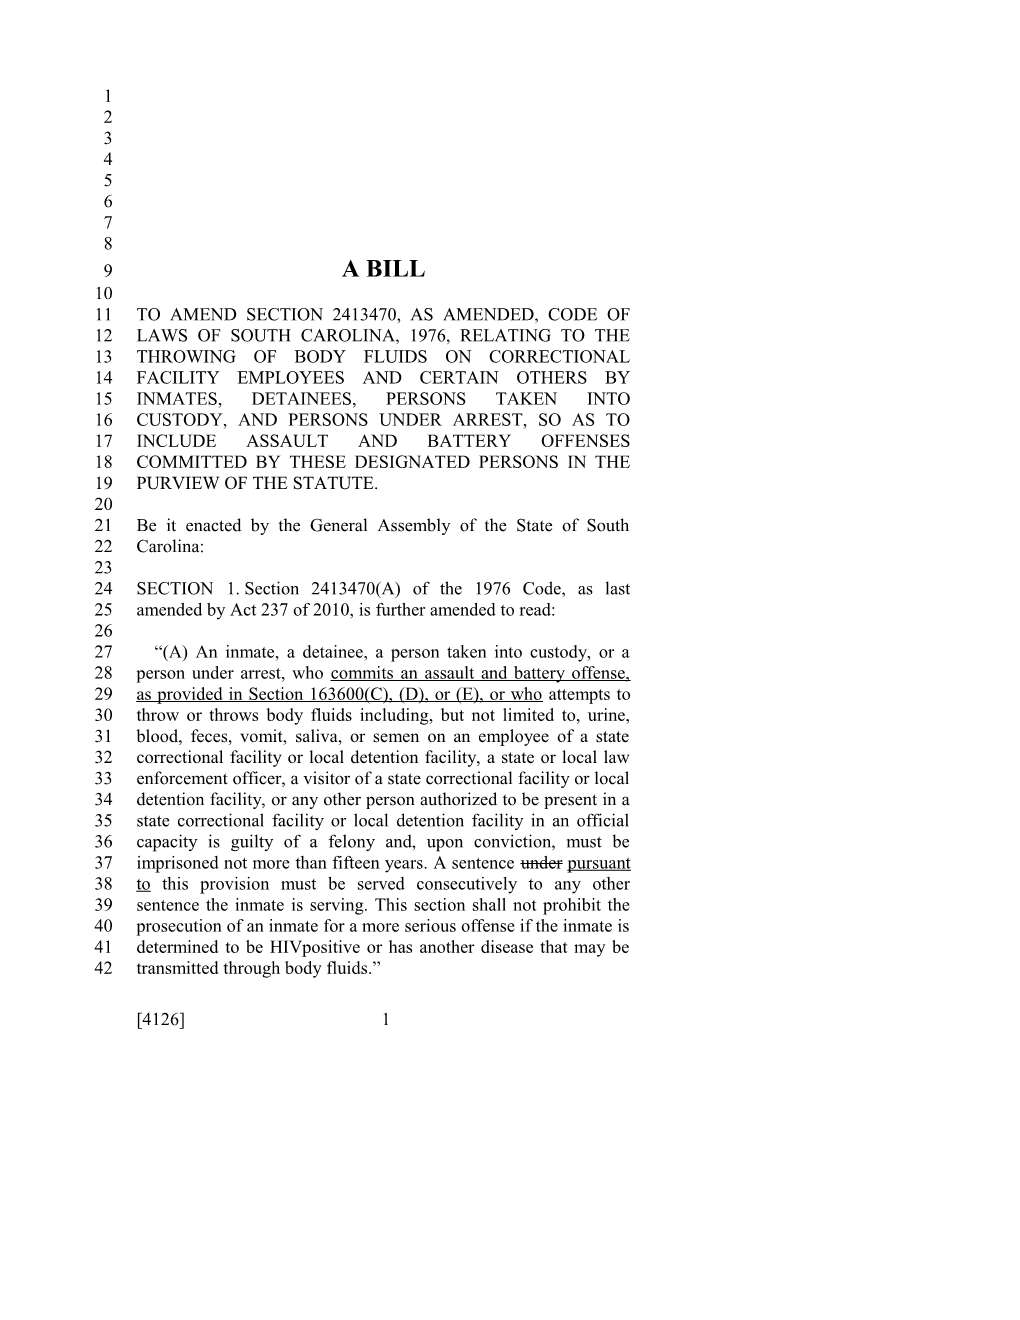 2015-2016 Bill 4126 Text of Previous Version (May 5, 2015) - South Carolina Legislature Online